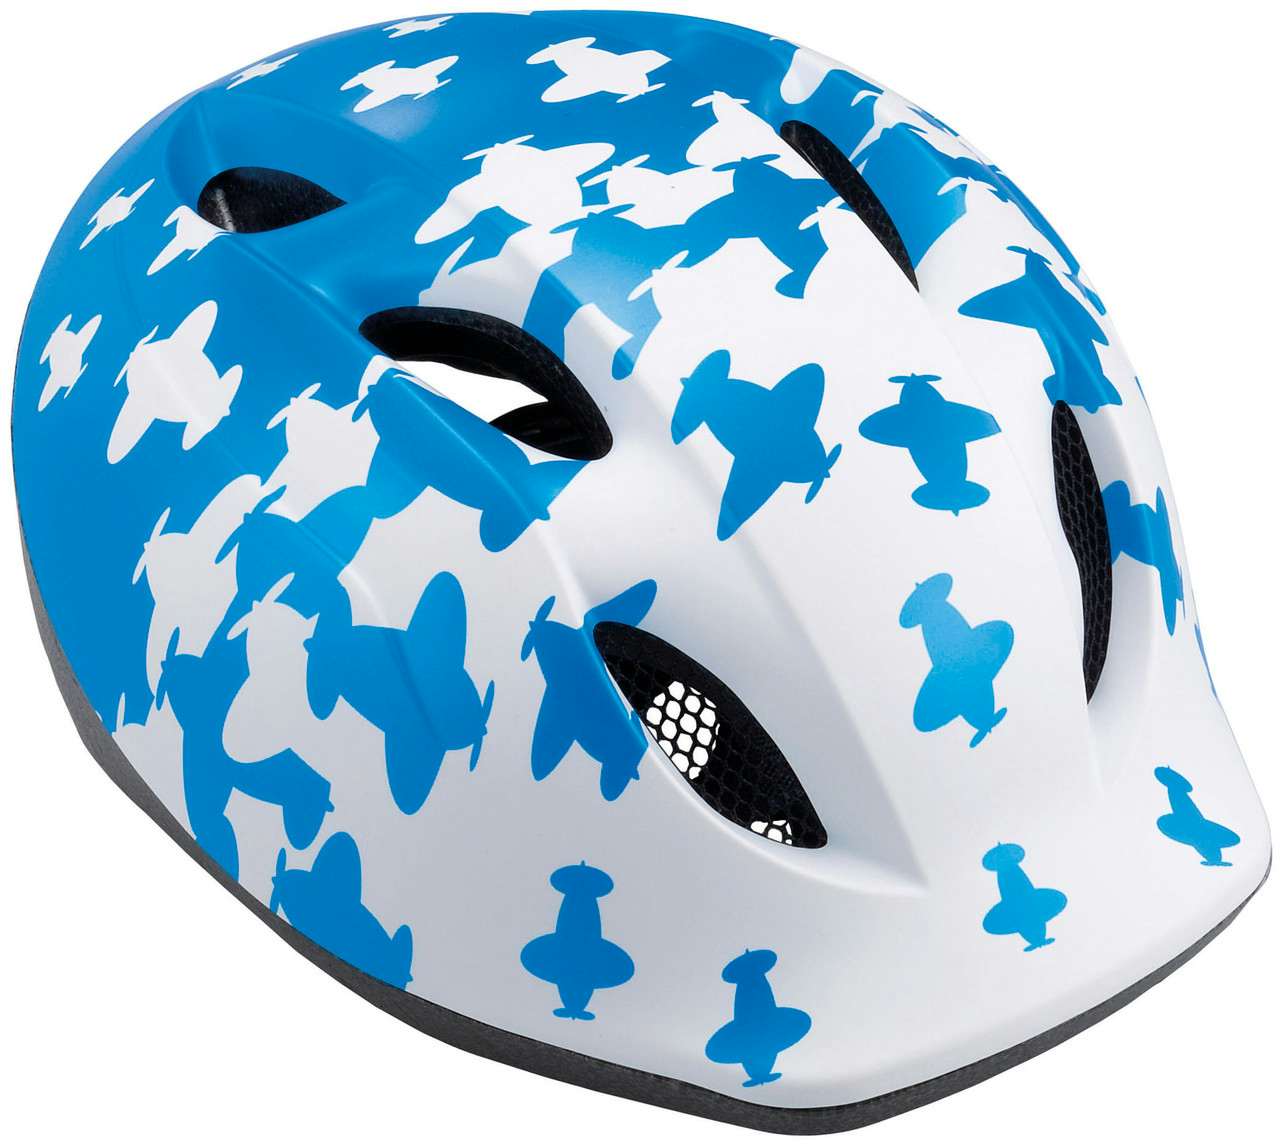 Buddy Helmet White/Blue Airplanes